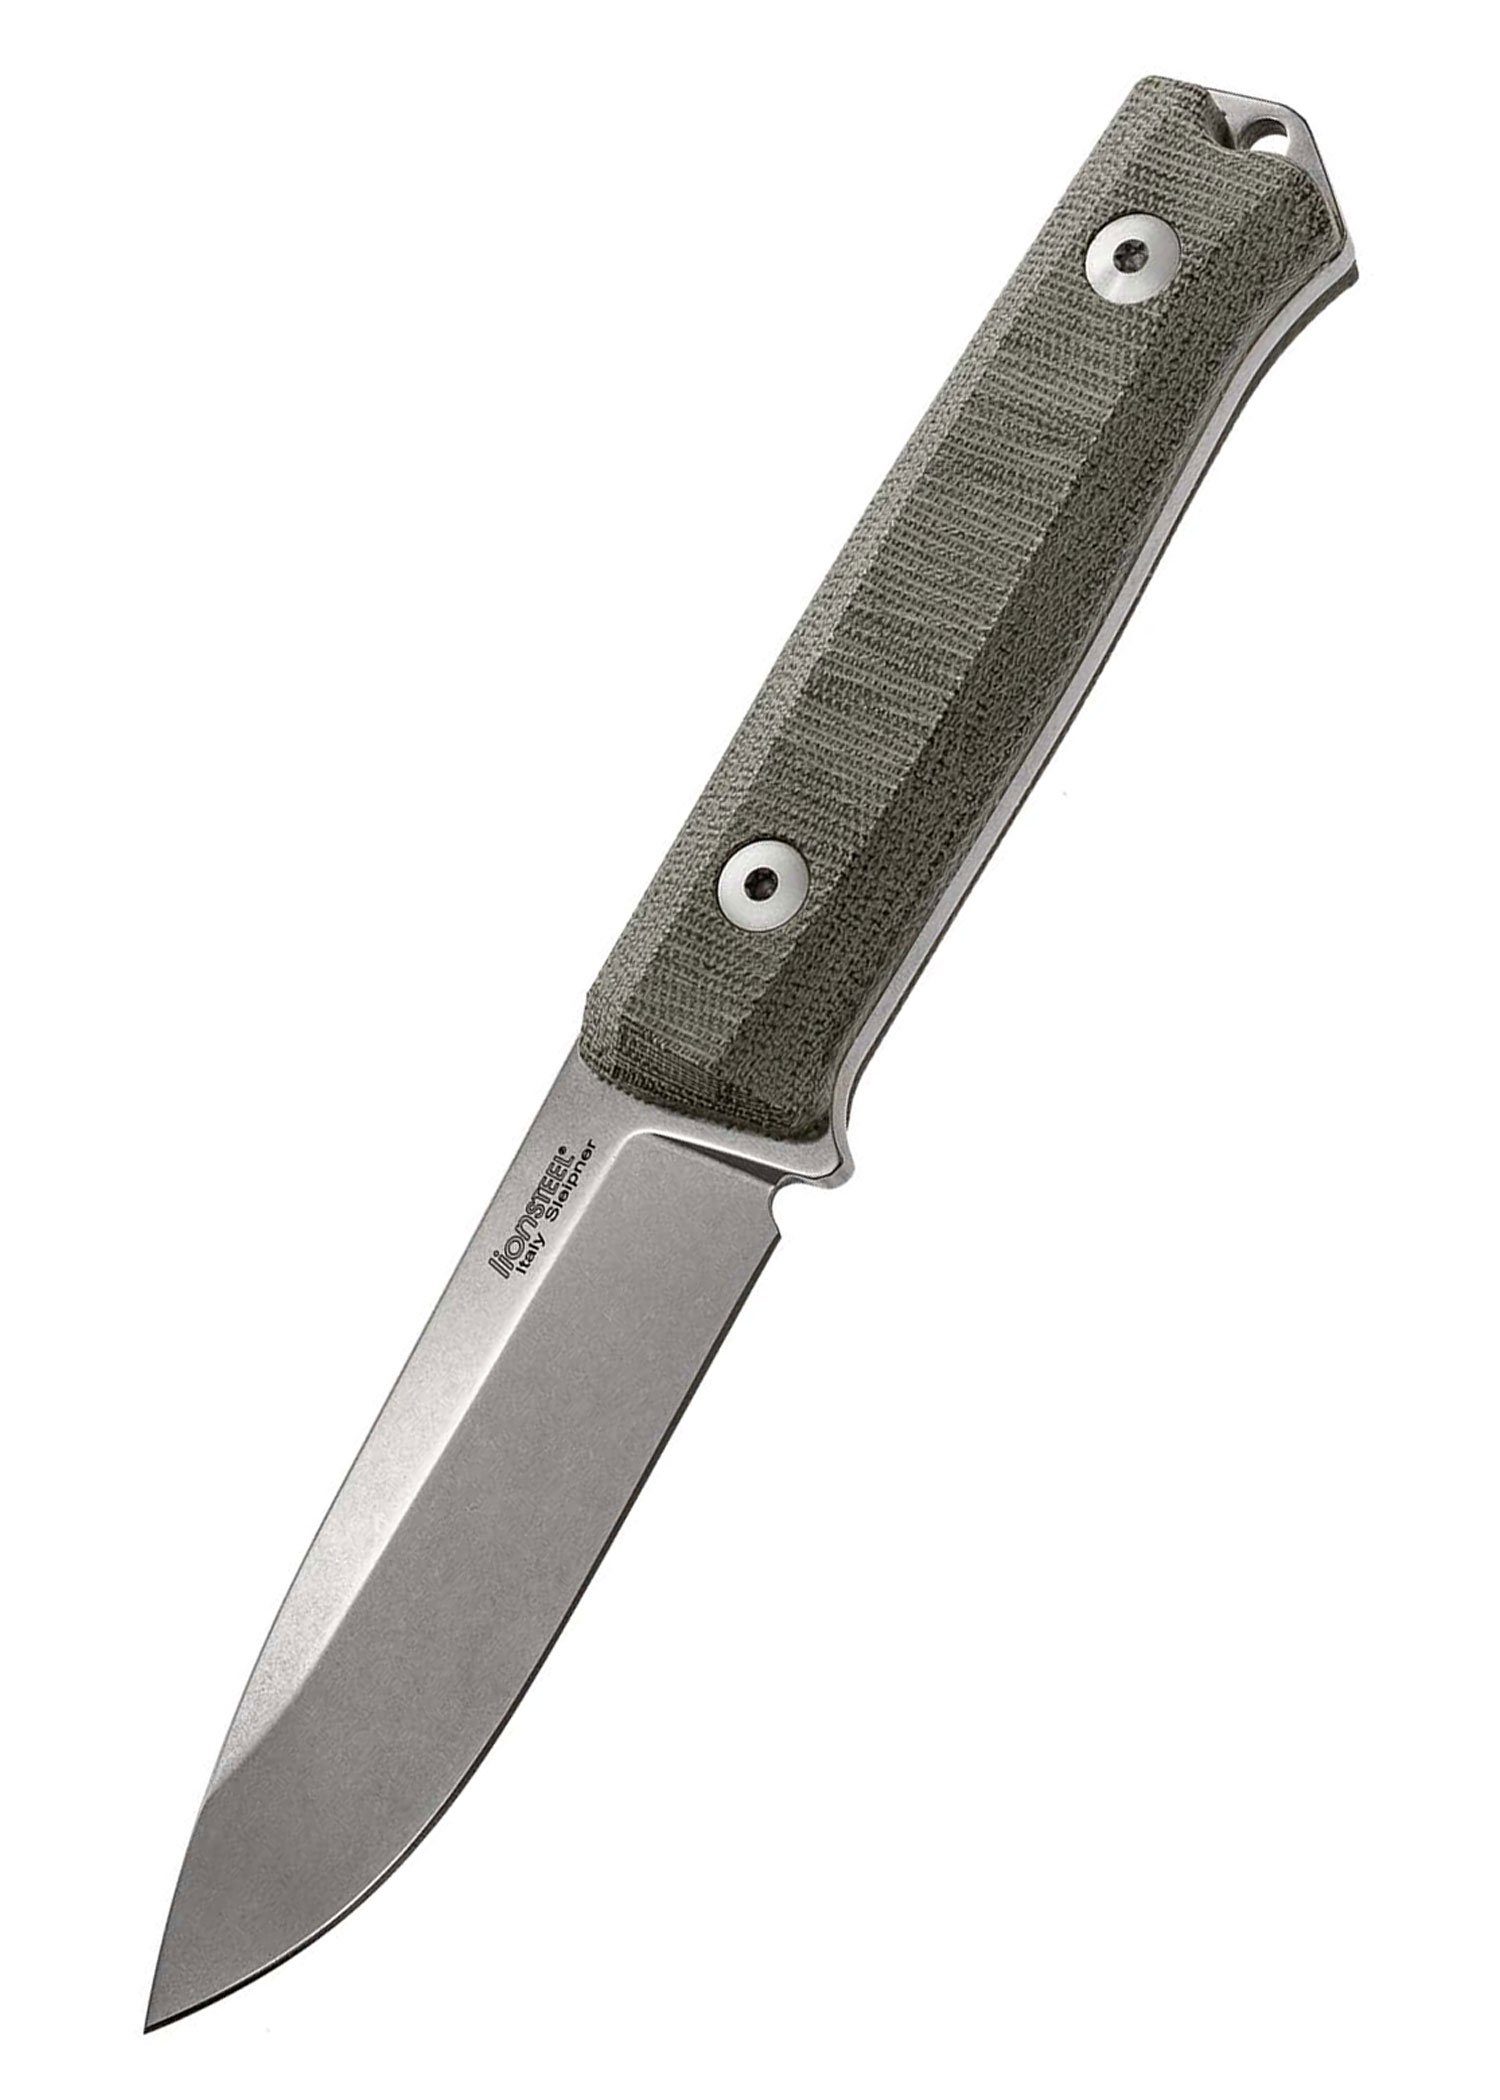 LionSteel Survival Knife Lionsteel B40 green Micarta feststehendes Messer mit Lederscheide, (1 St)